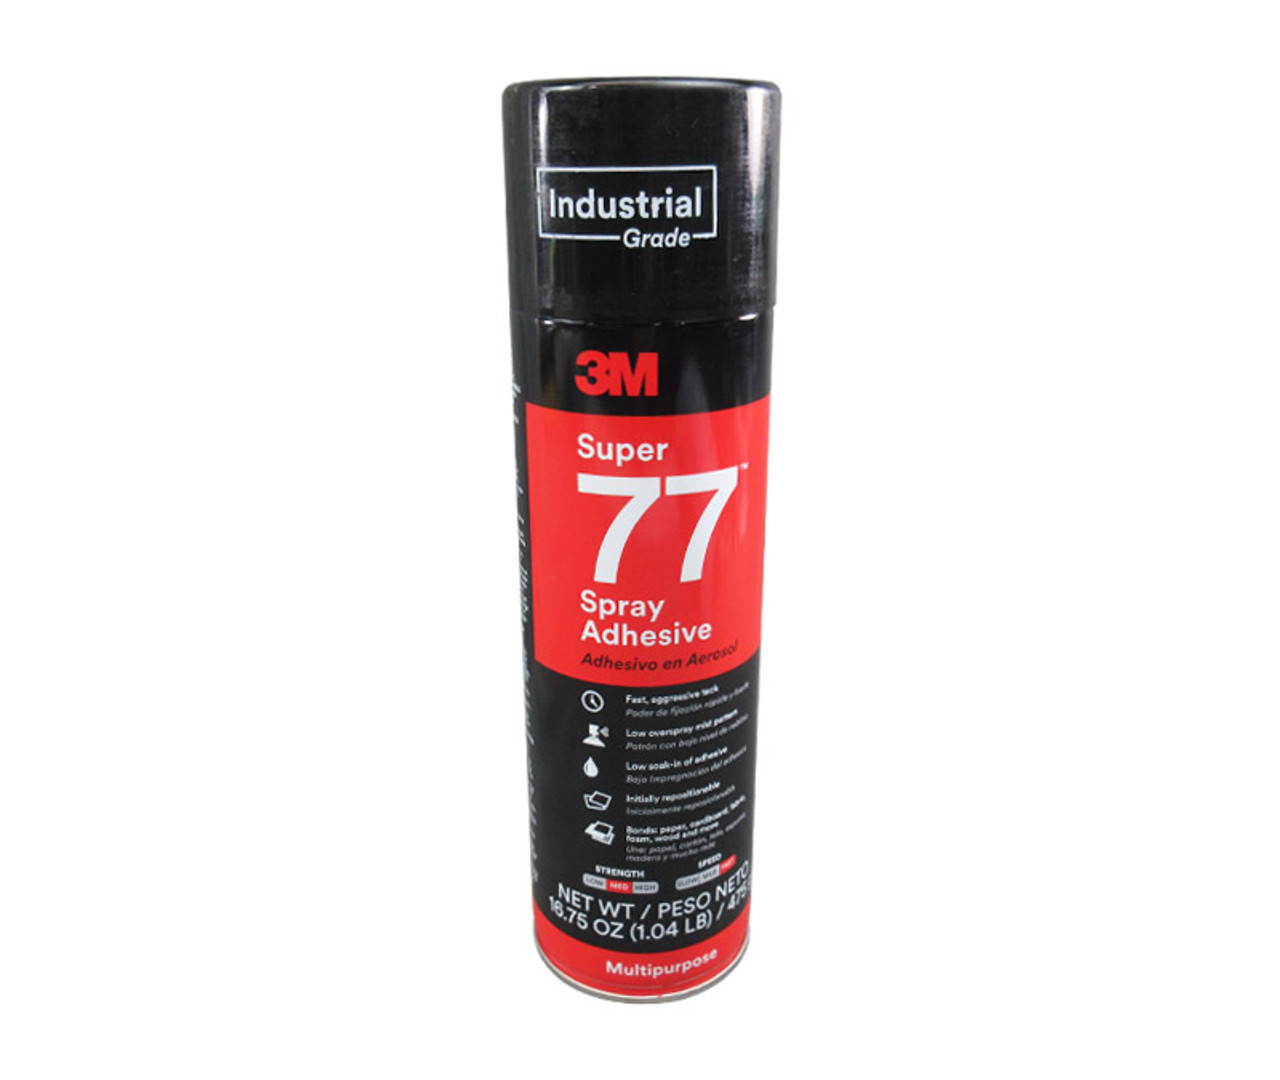 3M Super 77 spray adhesive